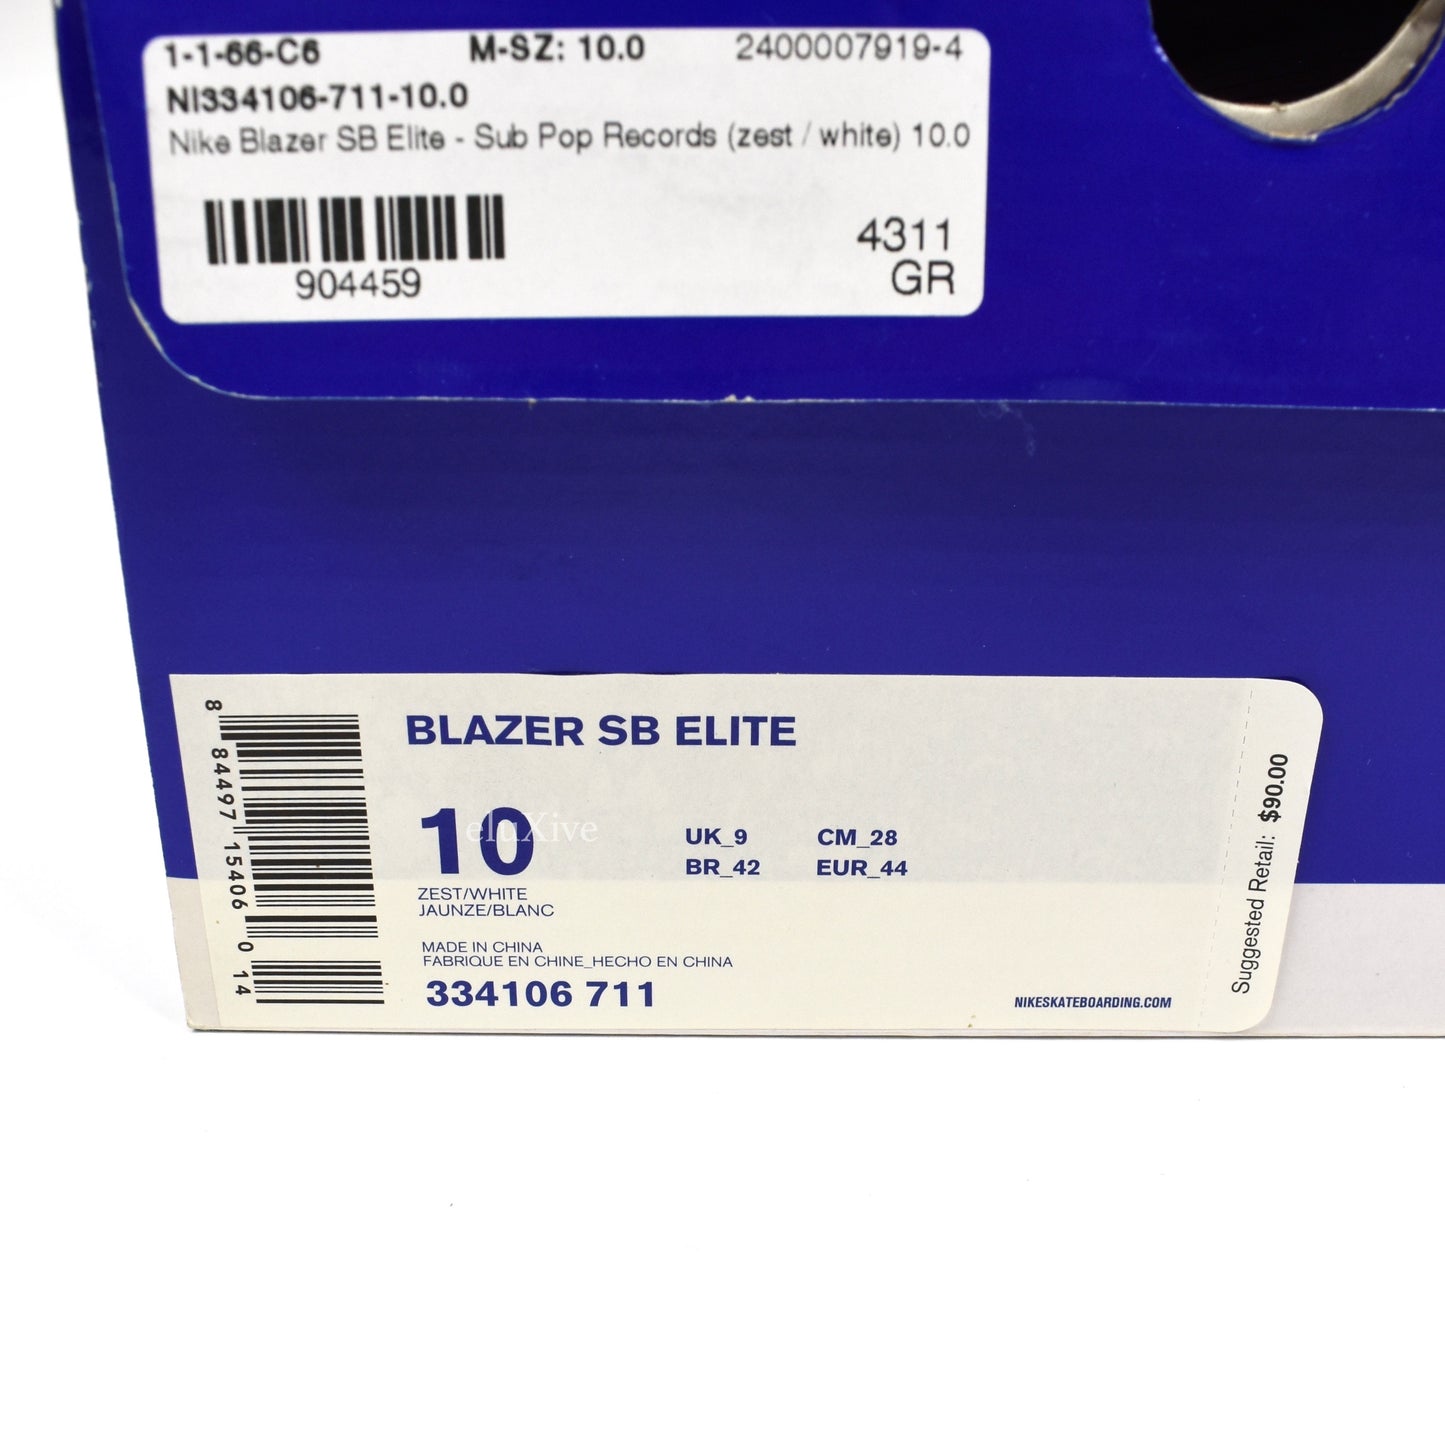 Nike - Blazer SB Elite 'Sub Pop Records'